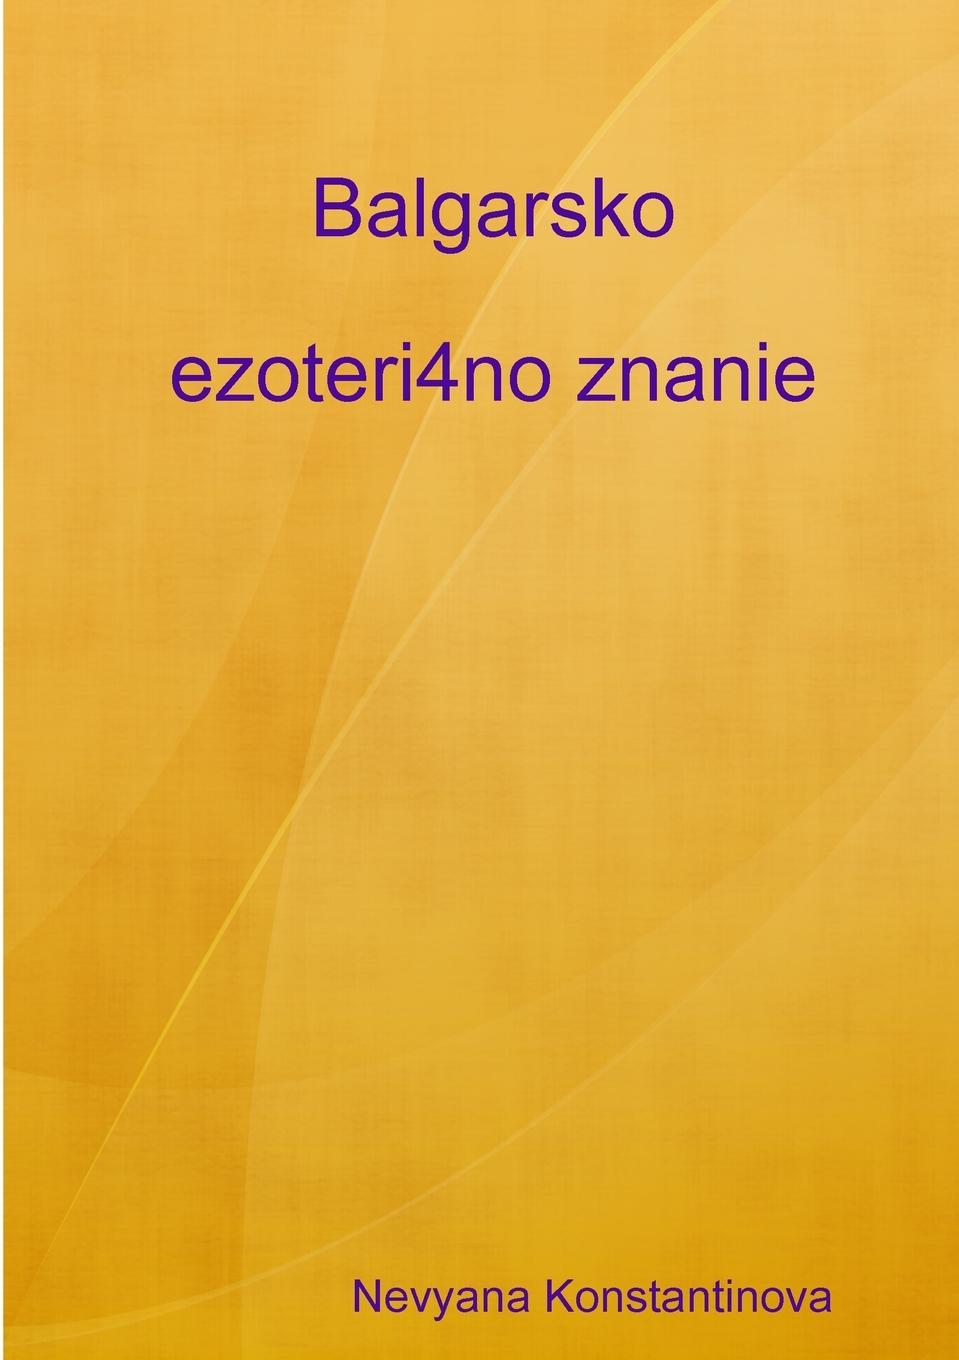 Book Balgarsko ezoteri4no znanie 